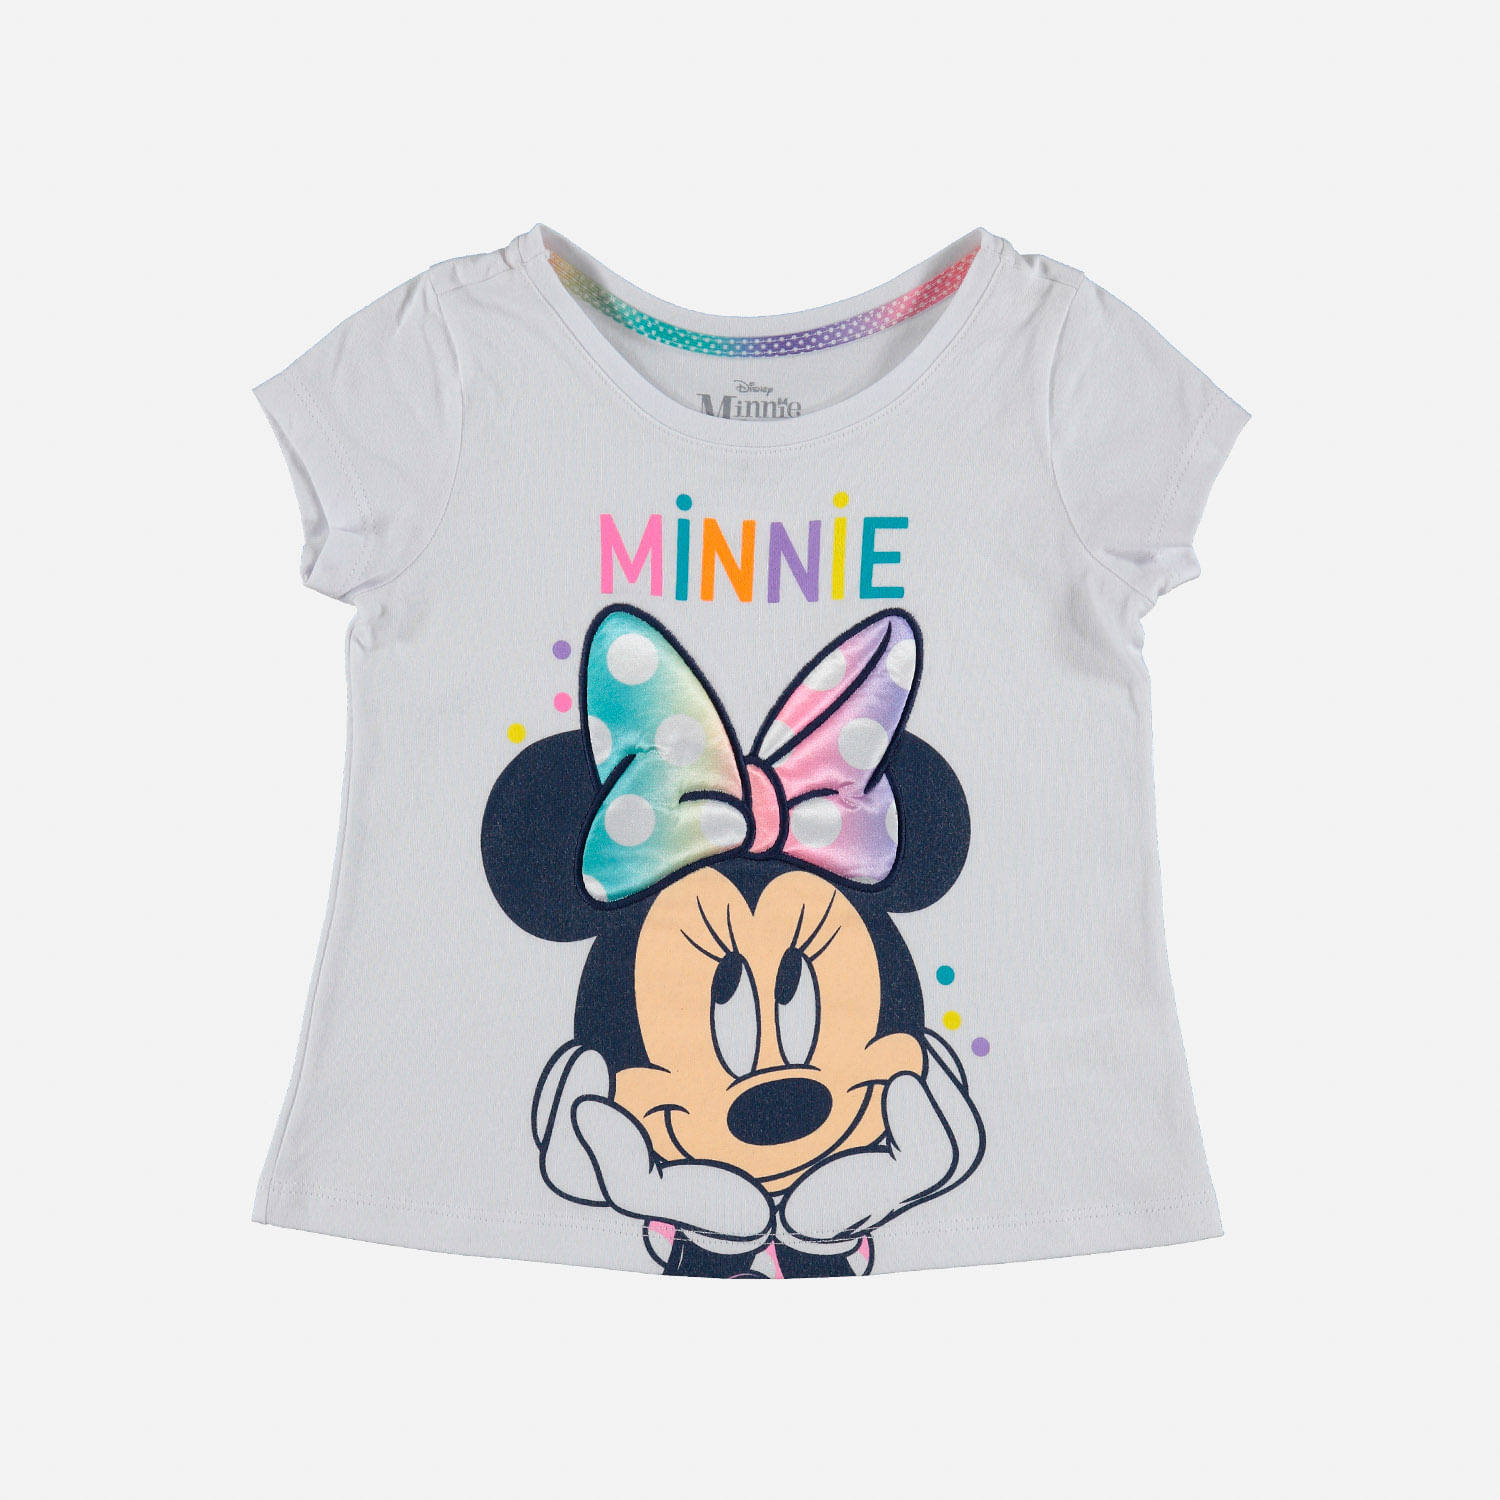 Camiseta de Minnie blanca estampada para niña de a 5T